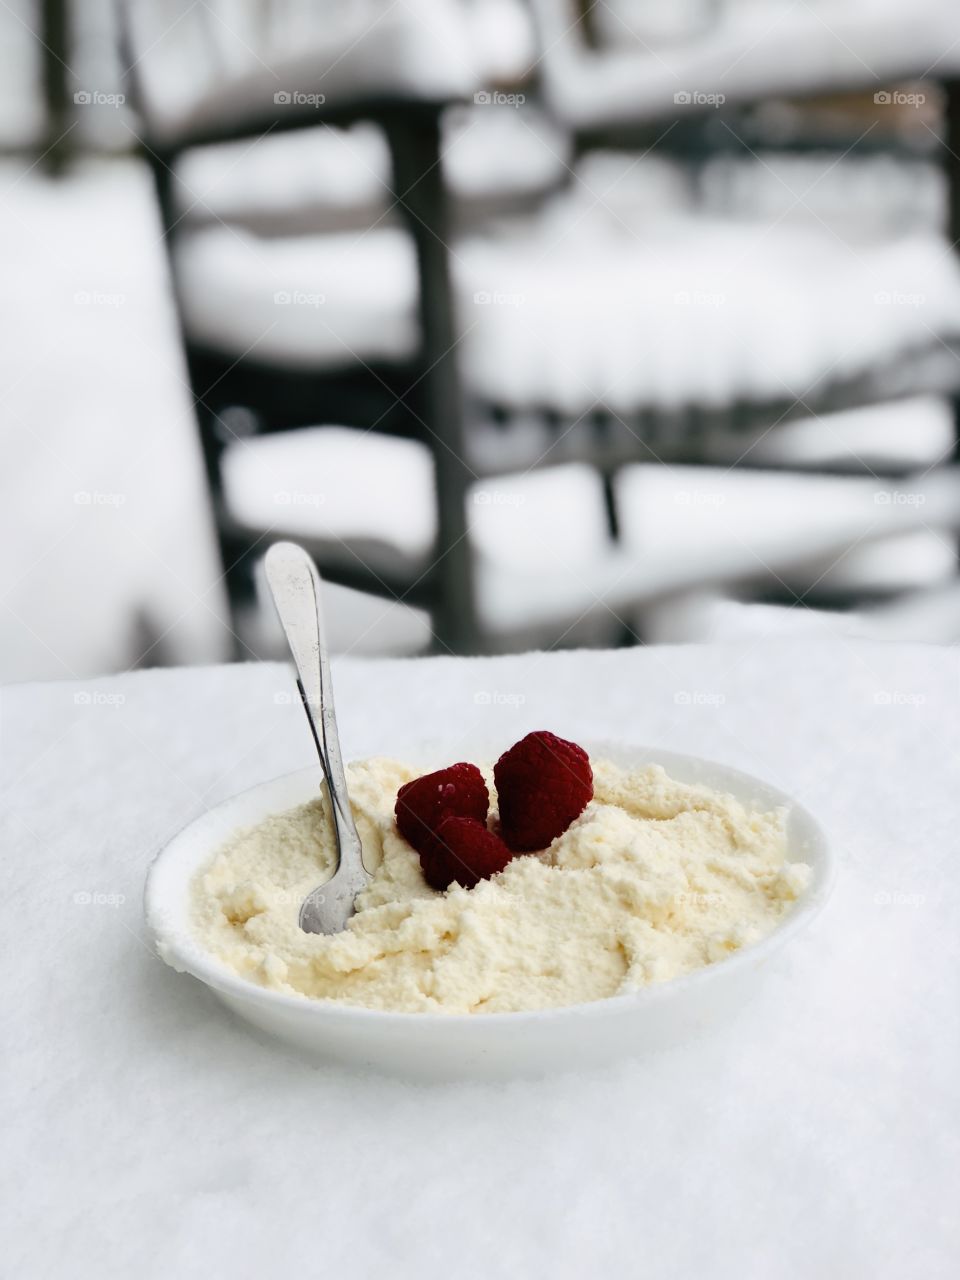 Snow cream and berries